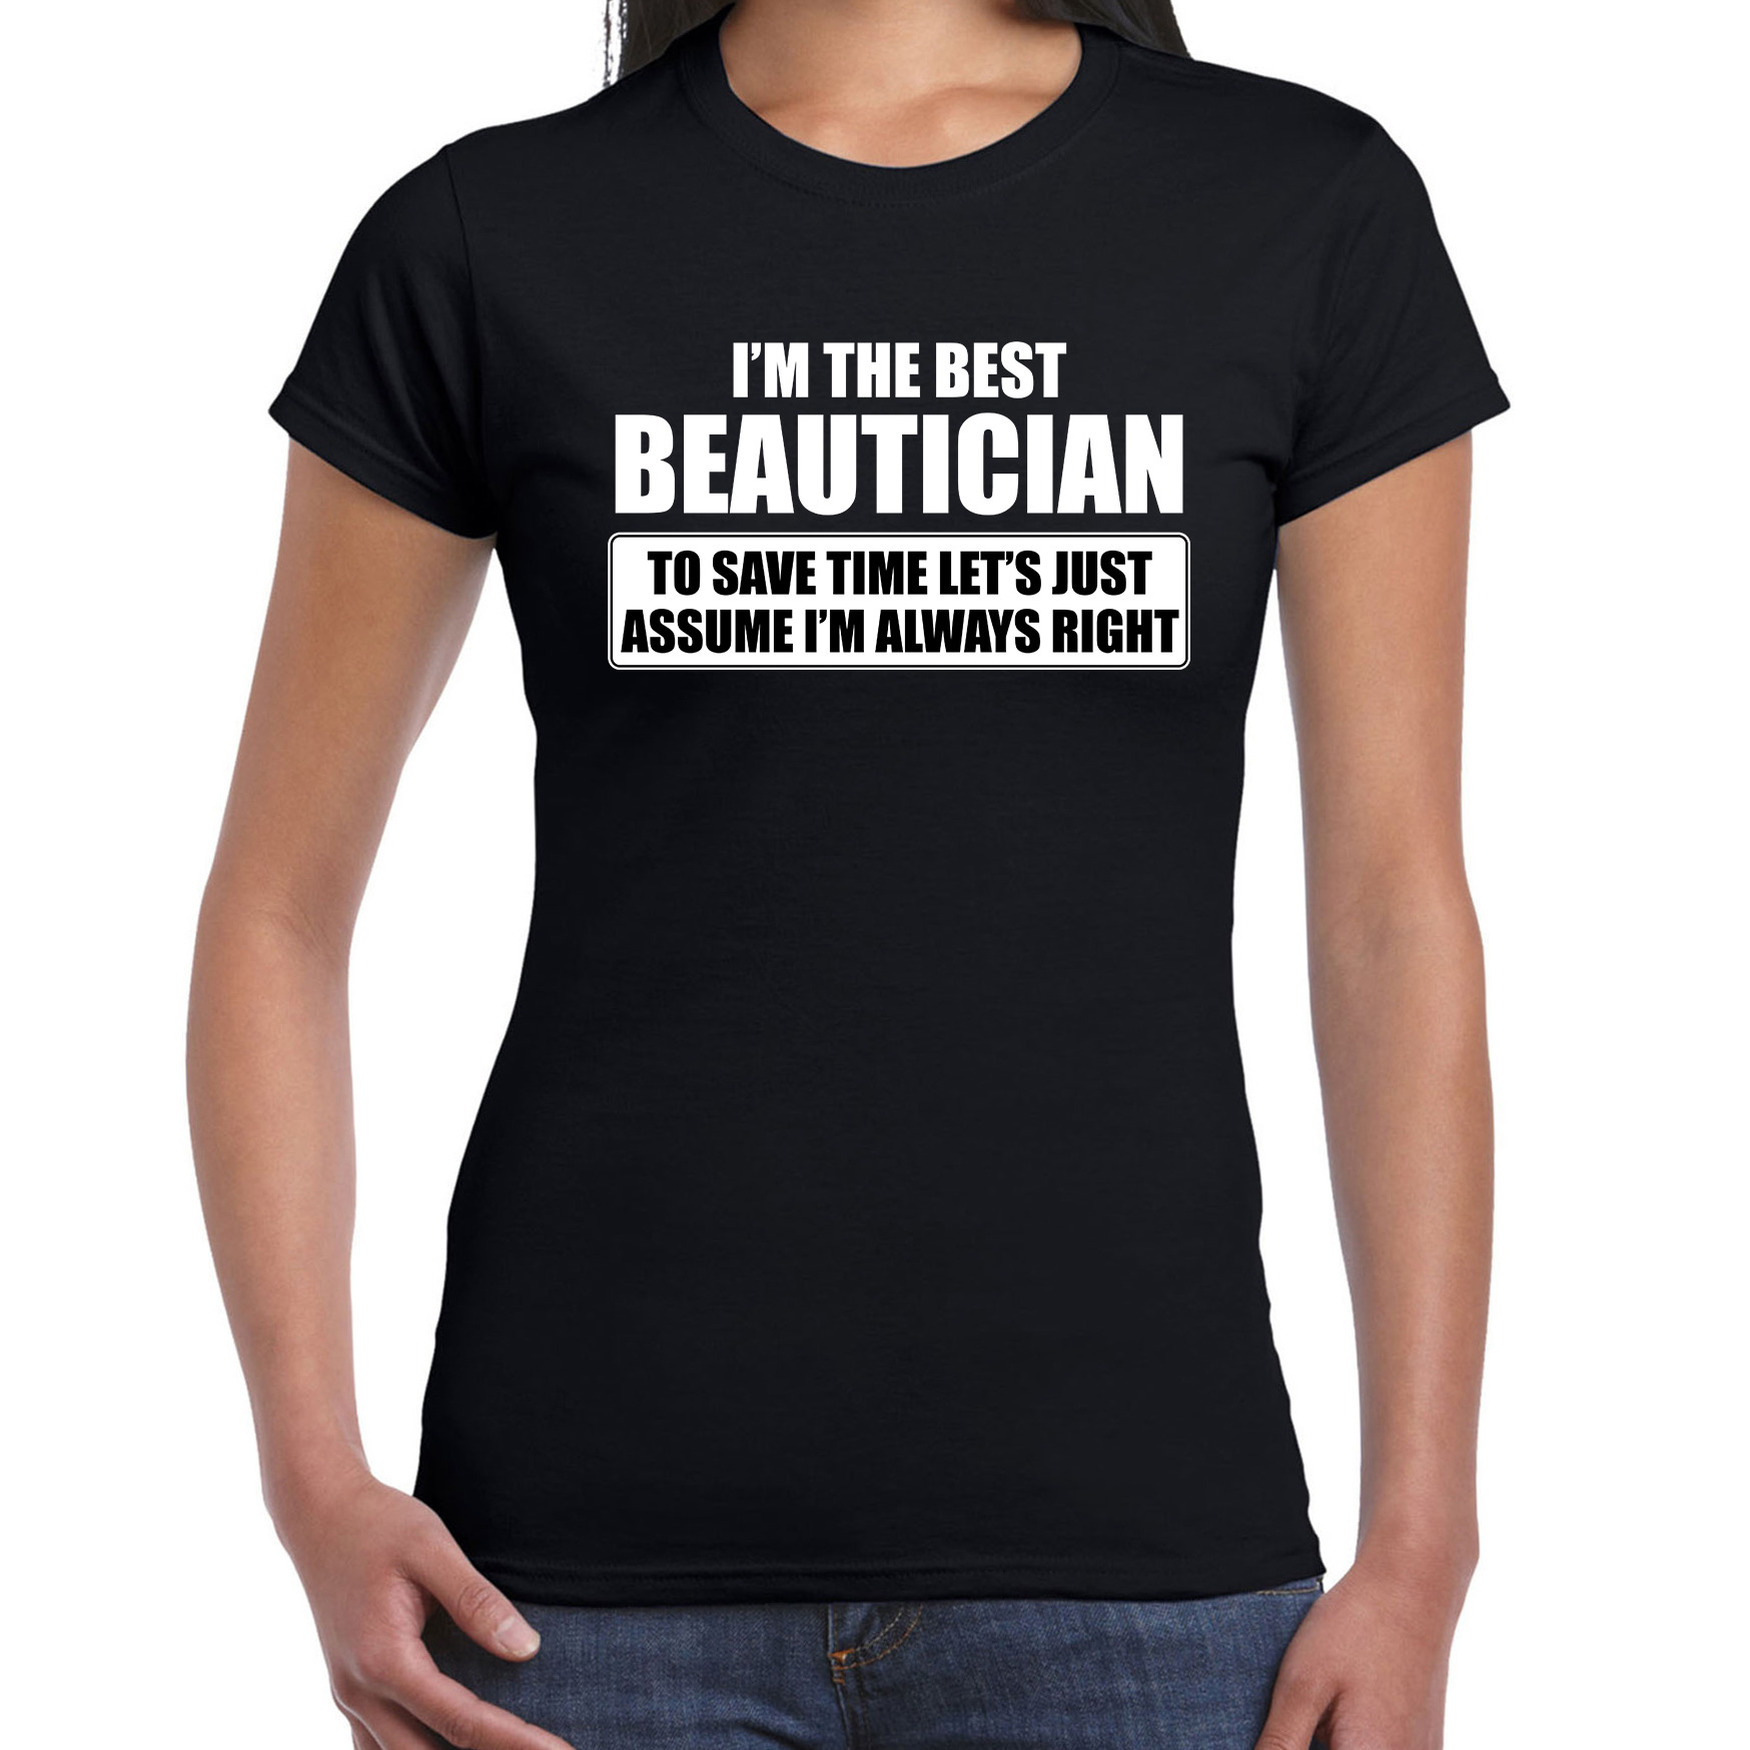 I'm the best beautician t-shirt zwart dames De beste schoonheidsspecialist cadeau